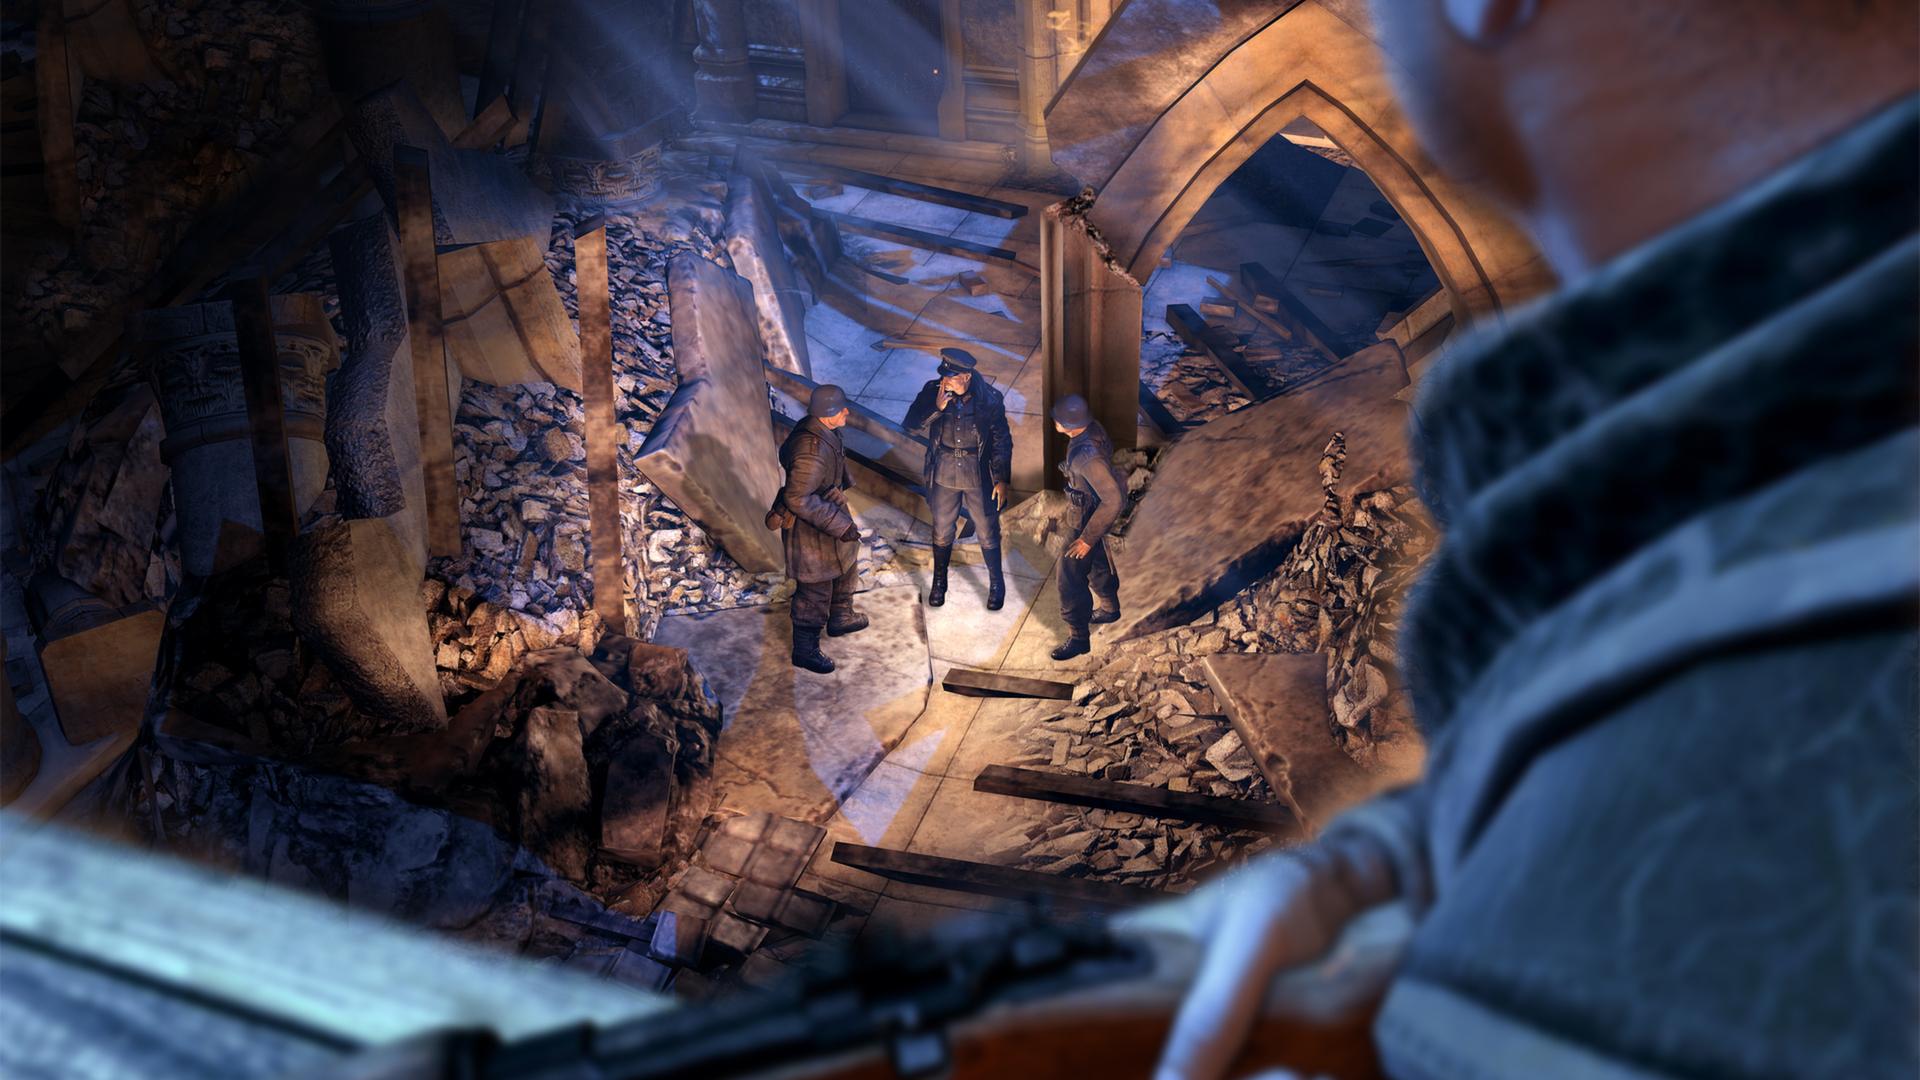 Screenshot №4 from game Sniper Elite V2